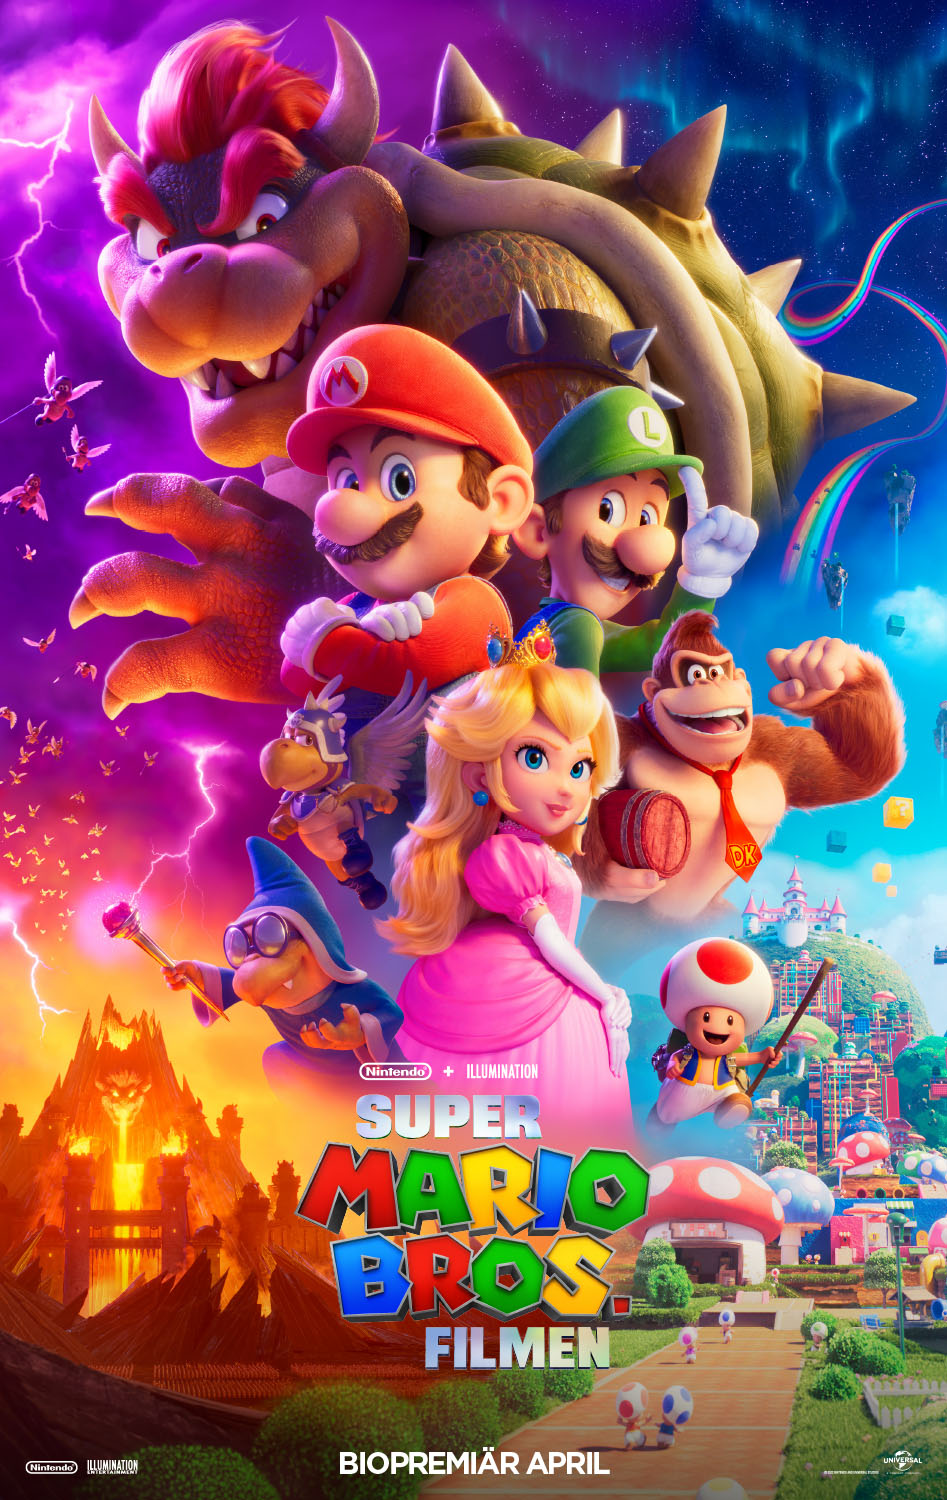 You are currently viewing Super Mario Bros. Filmen